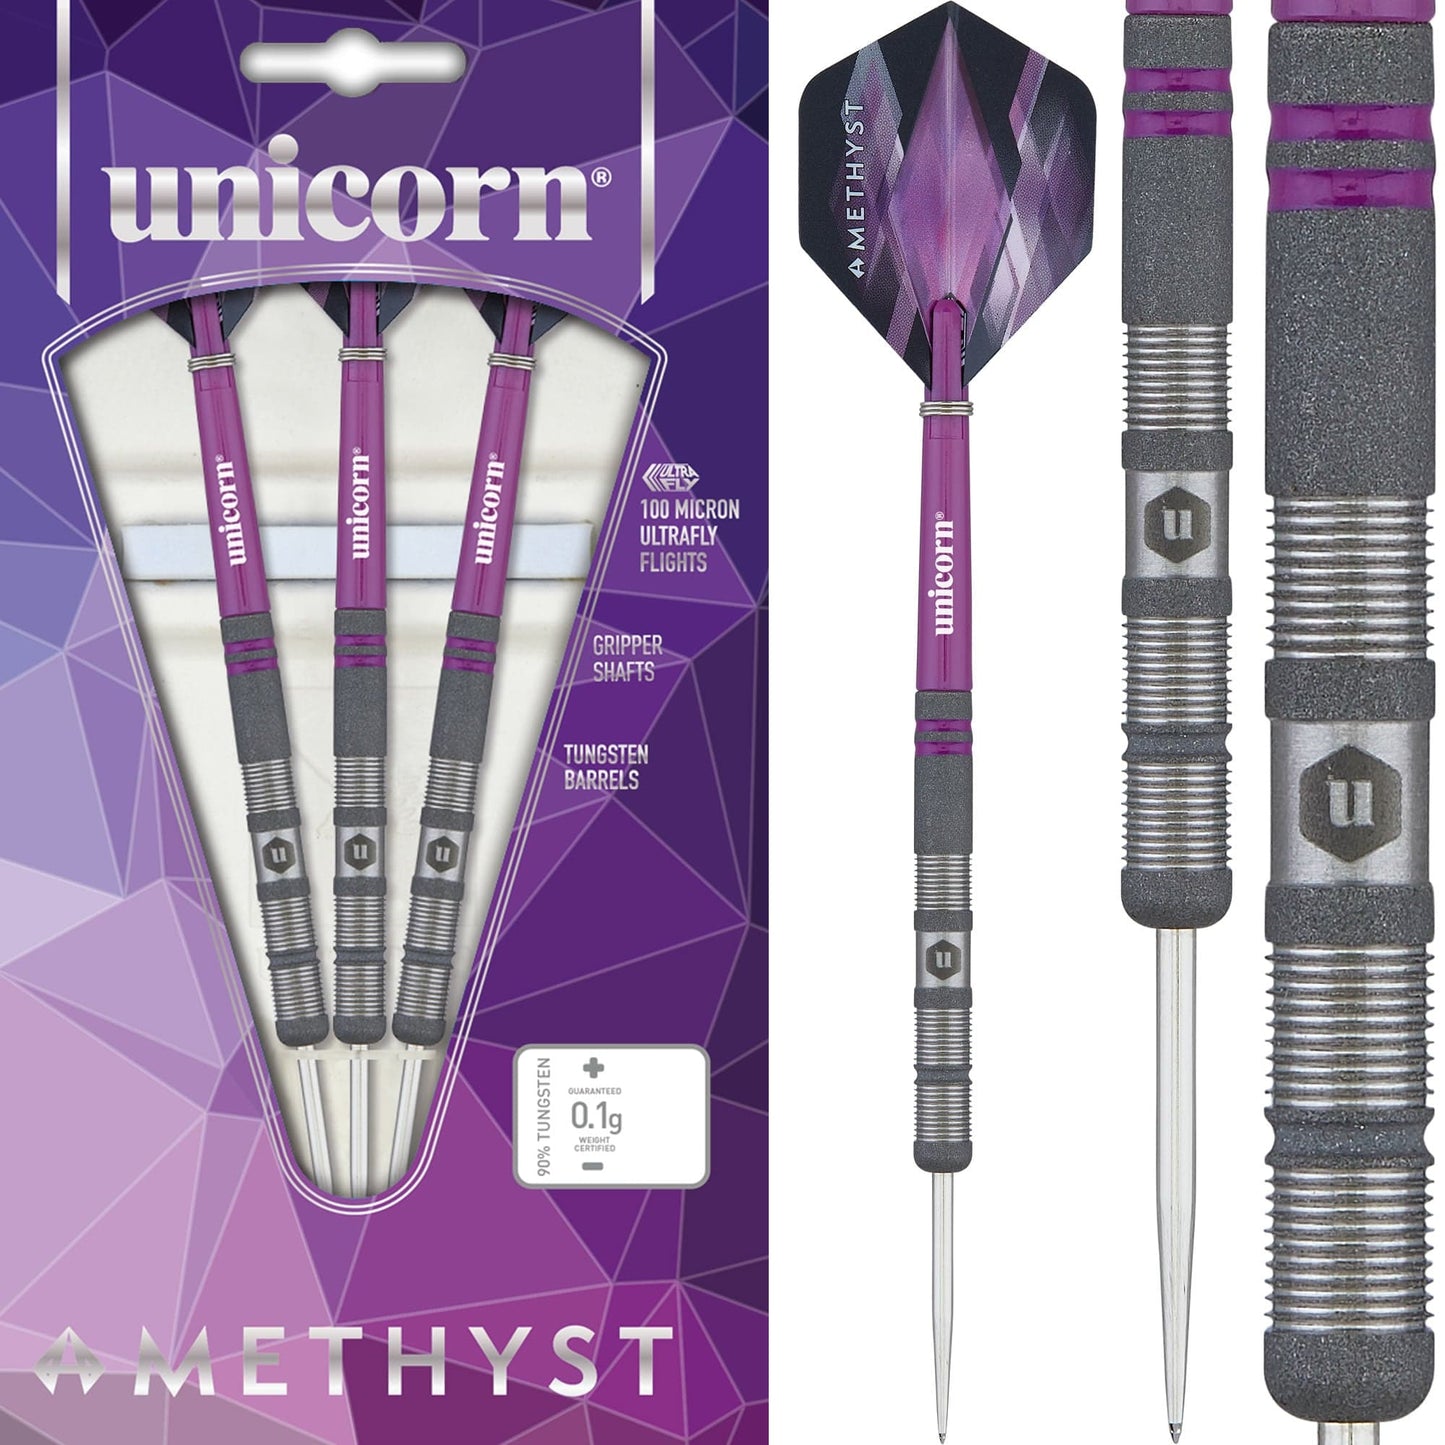 Unicorn Amethyst Darts - Steel Tip - Utech - Style 1 - Sandblasted